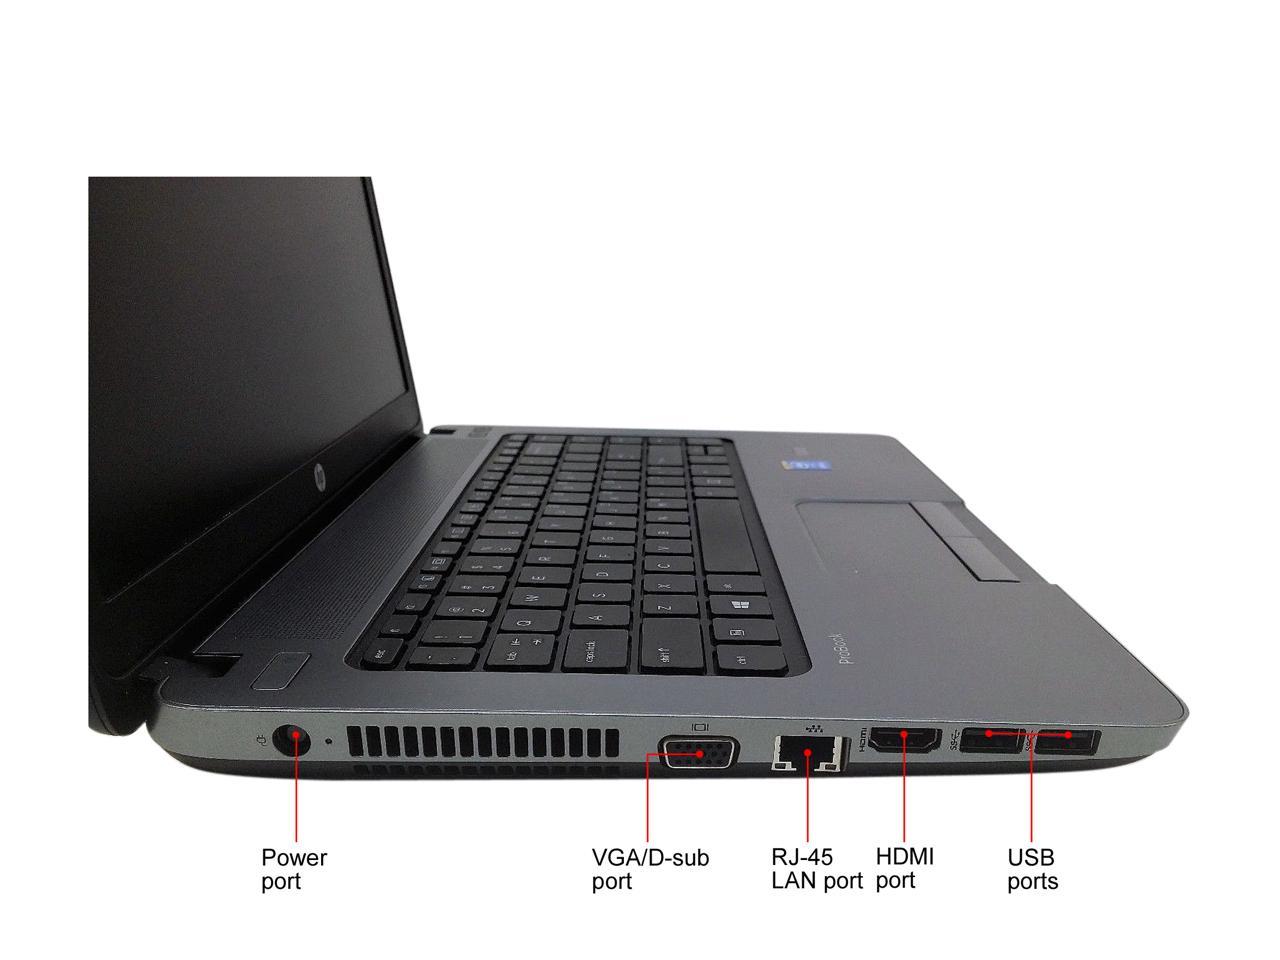 Notebook HP 440 G1 Core i7 4ª Geração 8Gb SSD 120Gb Wifi